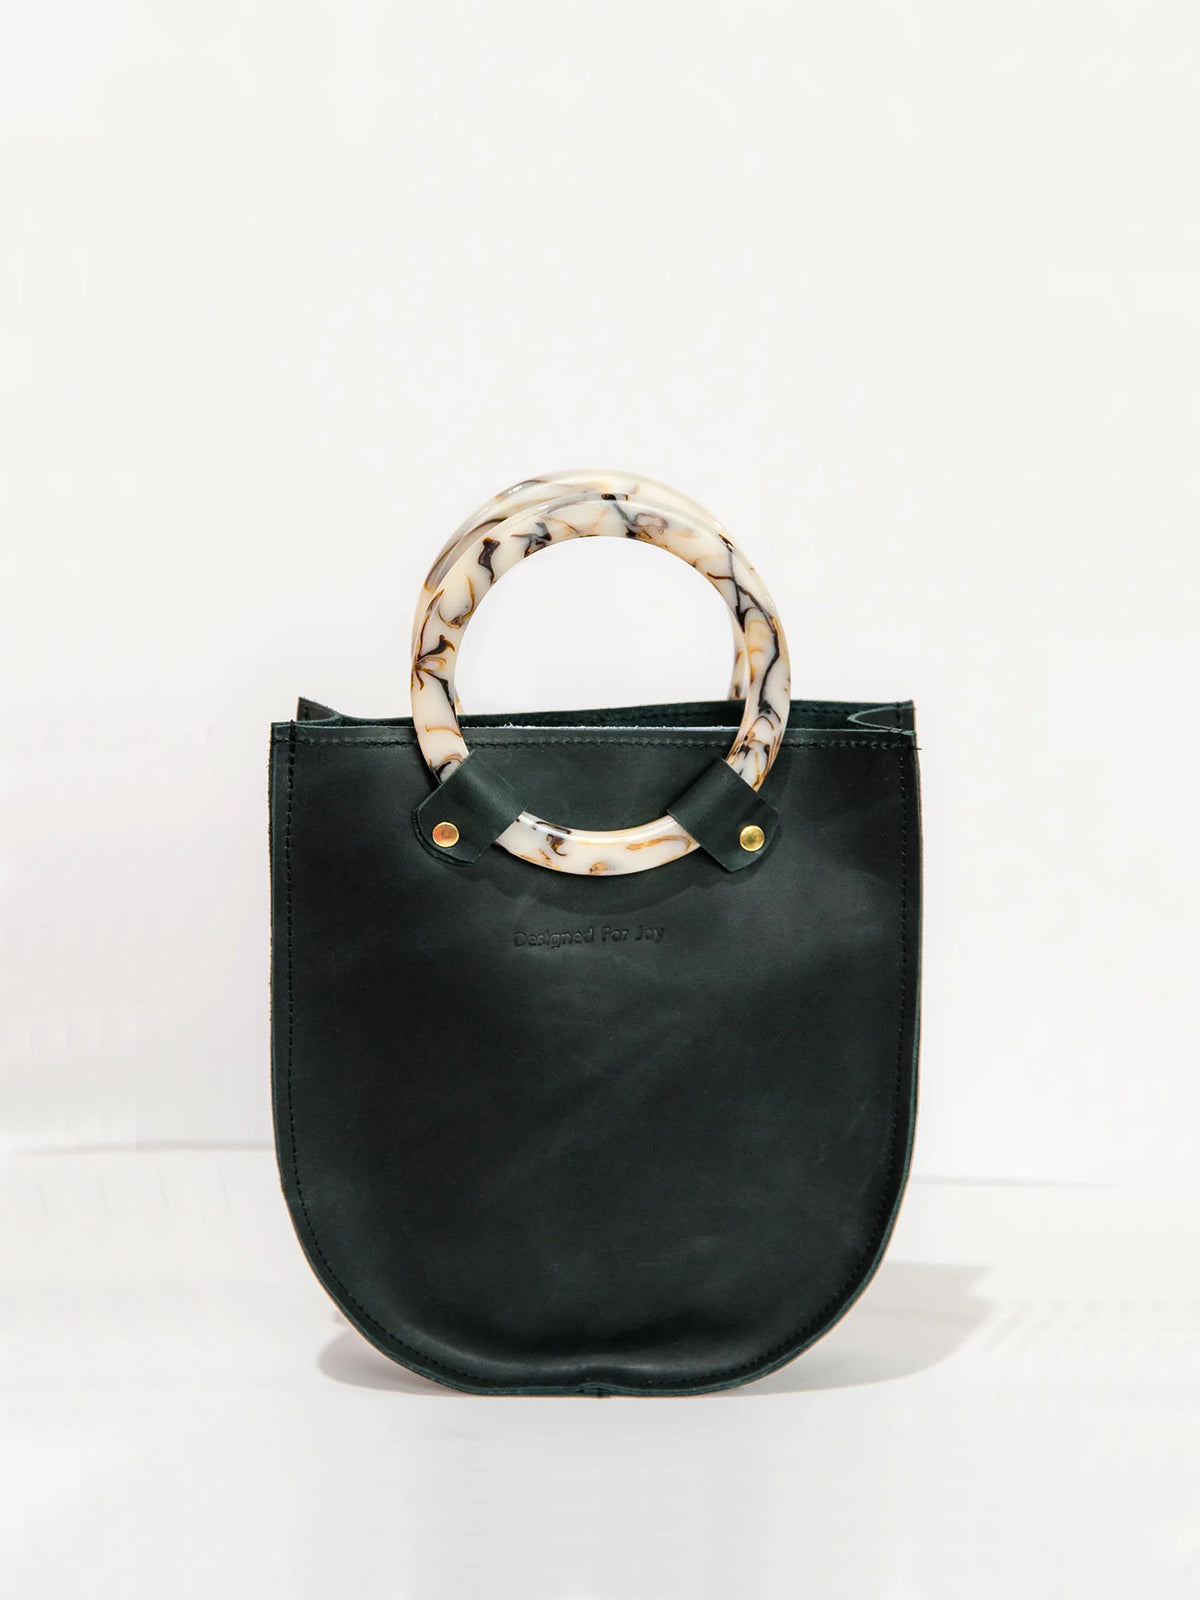 designed for joy lottie ring handle tote bag in black leather